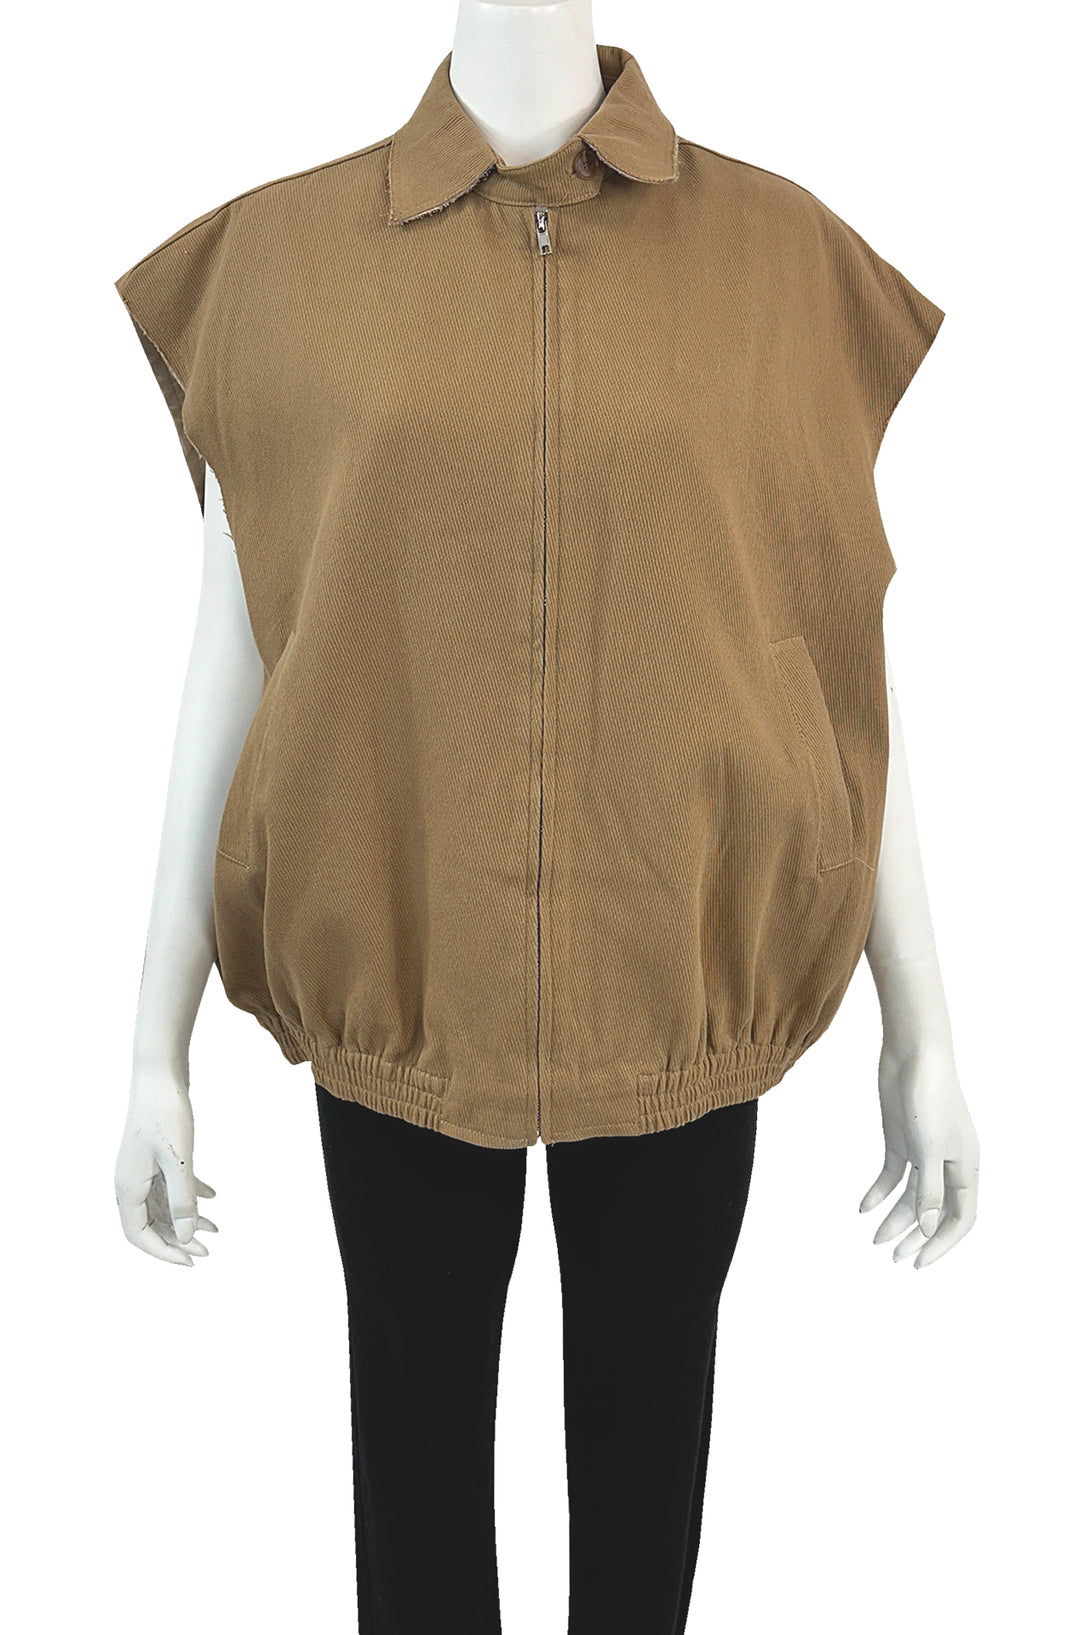 sleeveless jacket women, HT 360 Collective, sleeveless jean jacket, short sleeveless jacket, female sleeveless jacket,